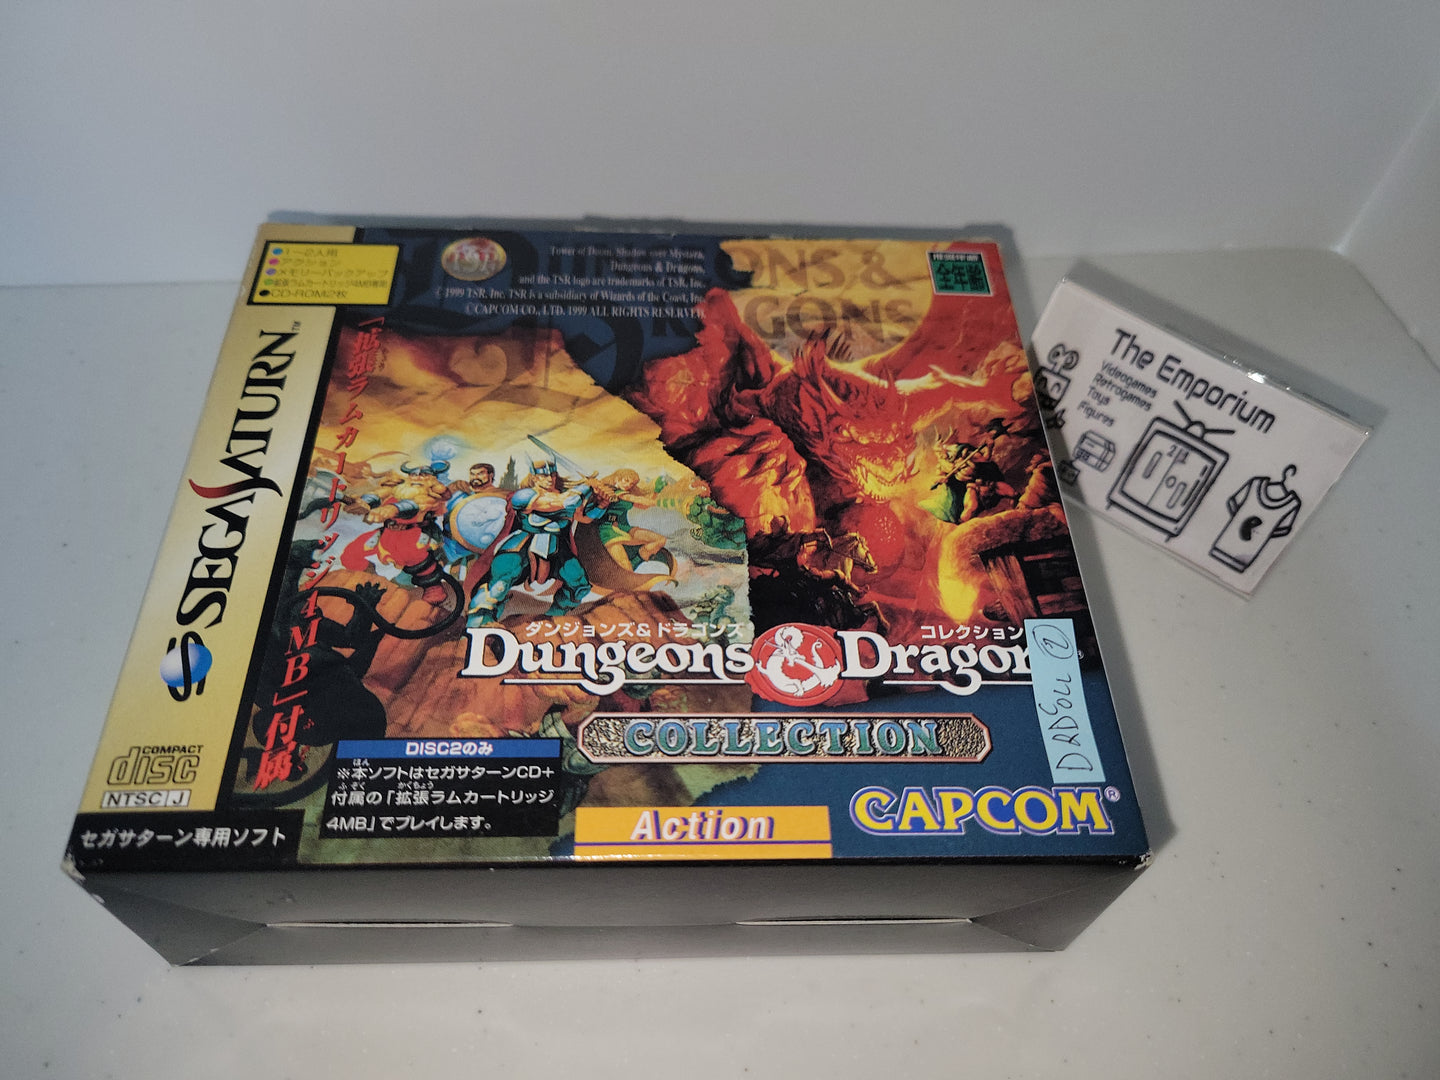 Dungeons & Dragons Collection (w/4MB RAM Cart) - Sega Saturn sat stn